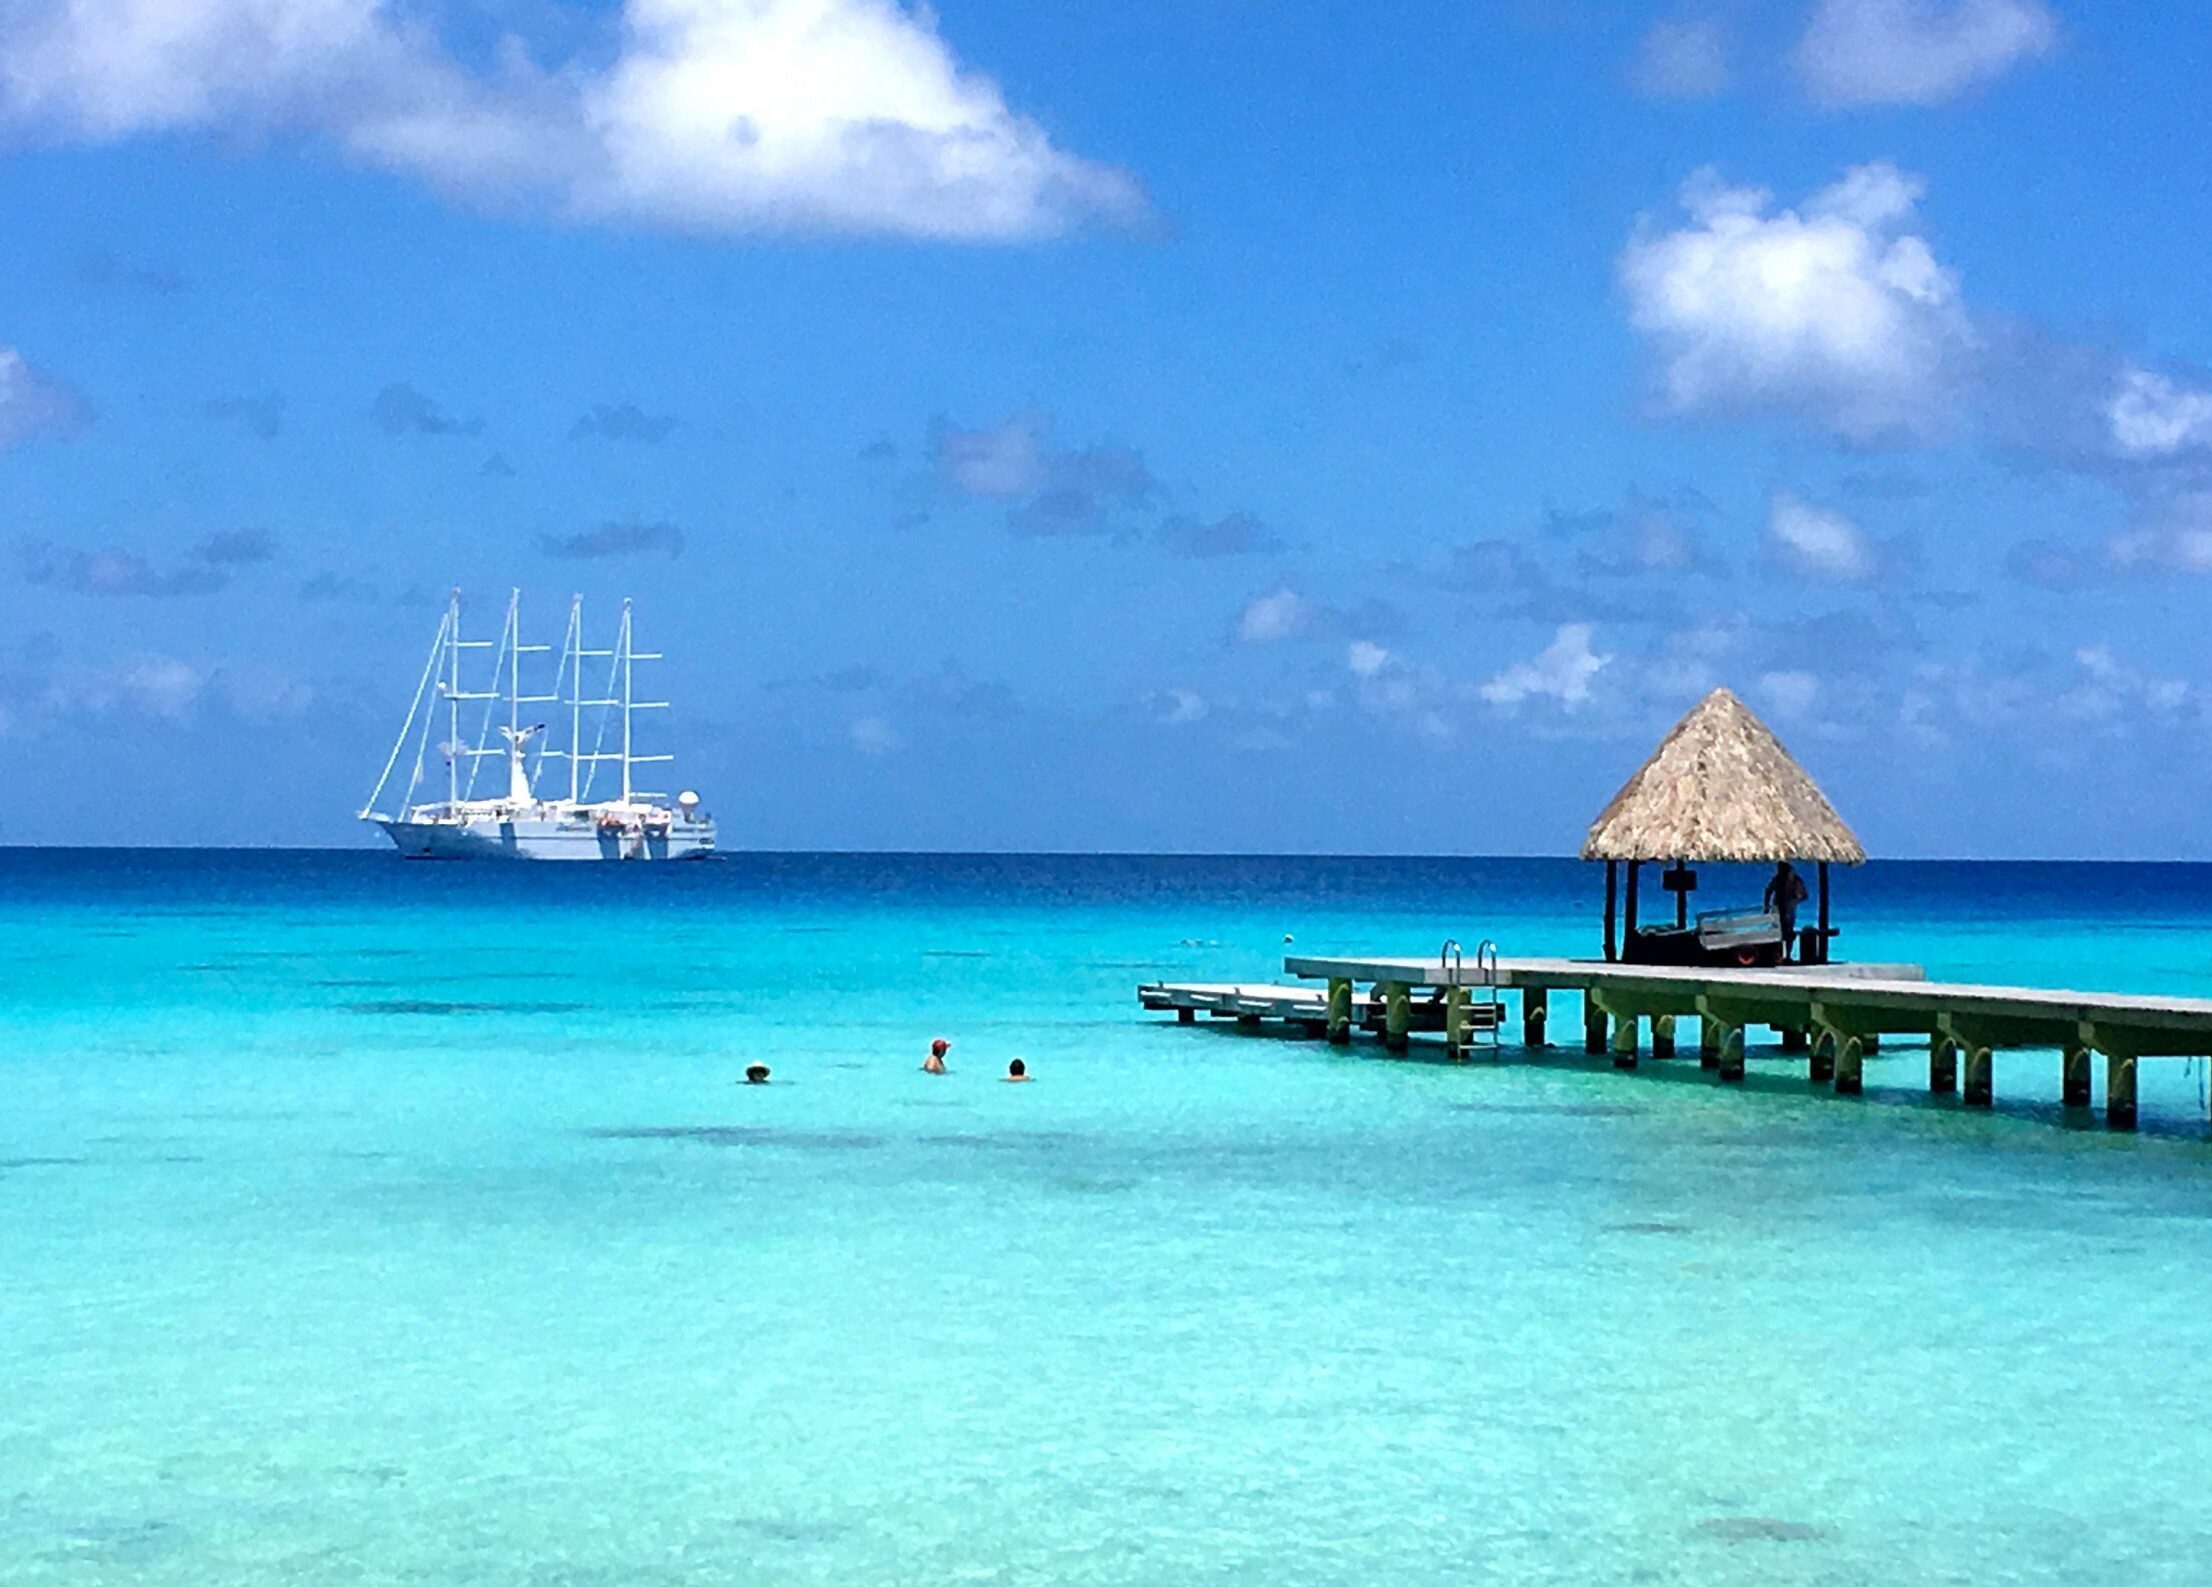 Nyd livet i Fransk Polynesien med Windstar Cruises